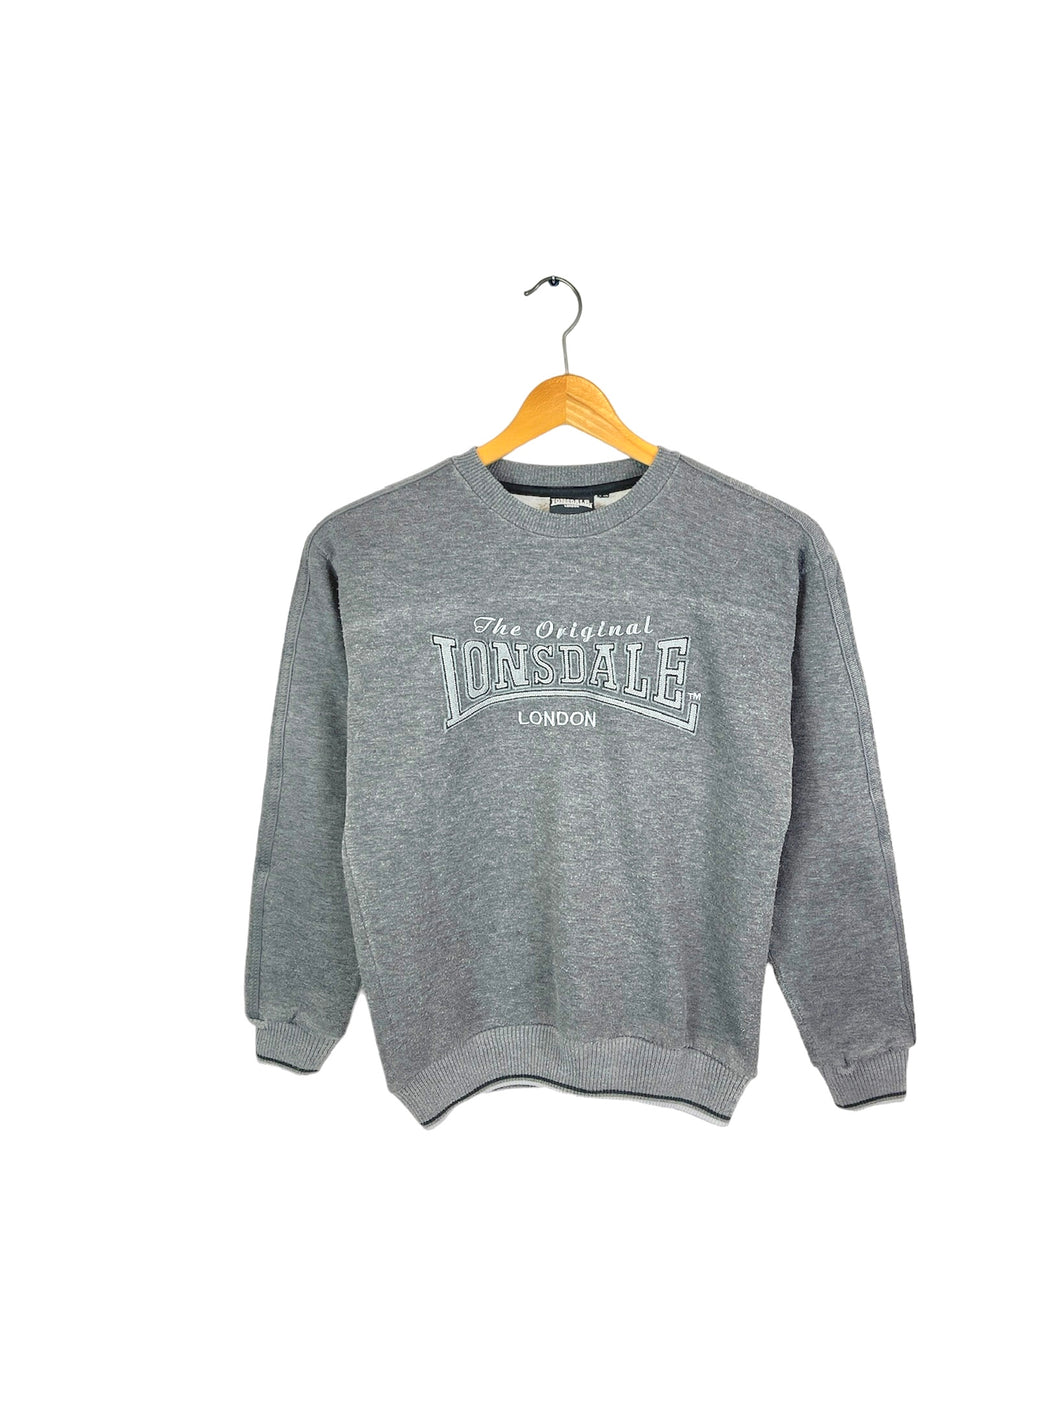 Lonsdale Sweatshirt - XSmall